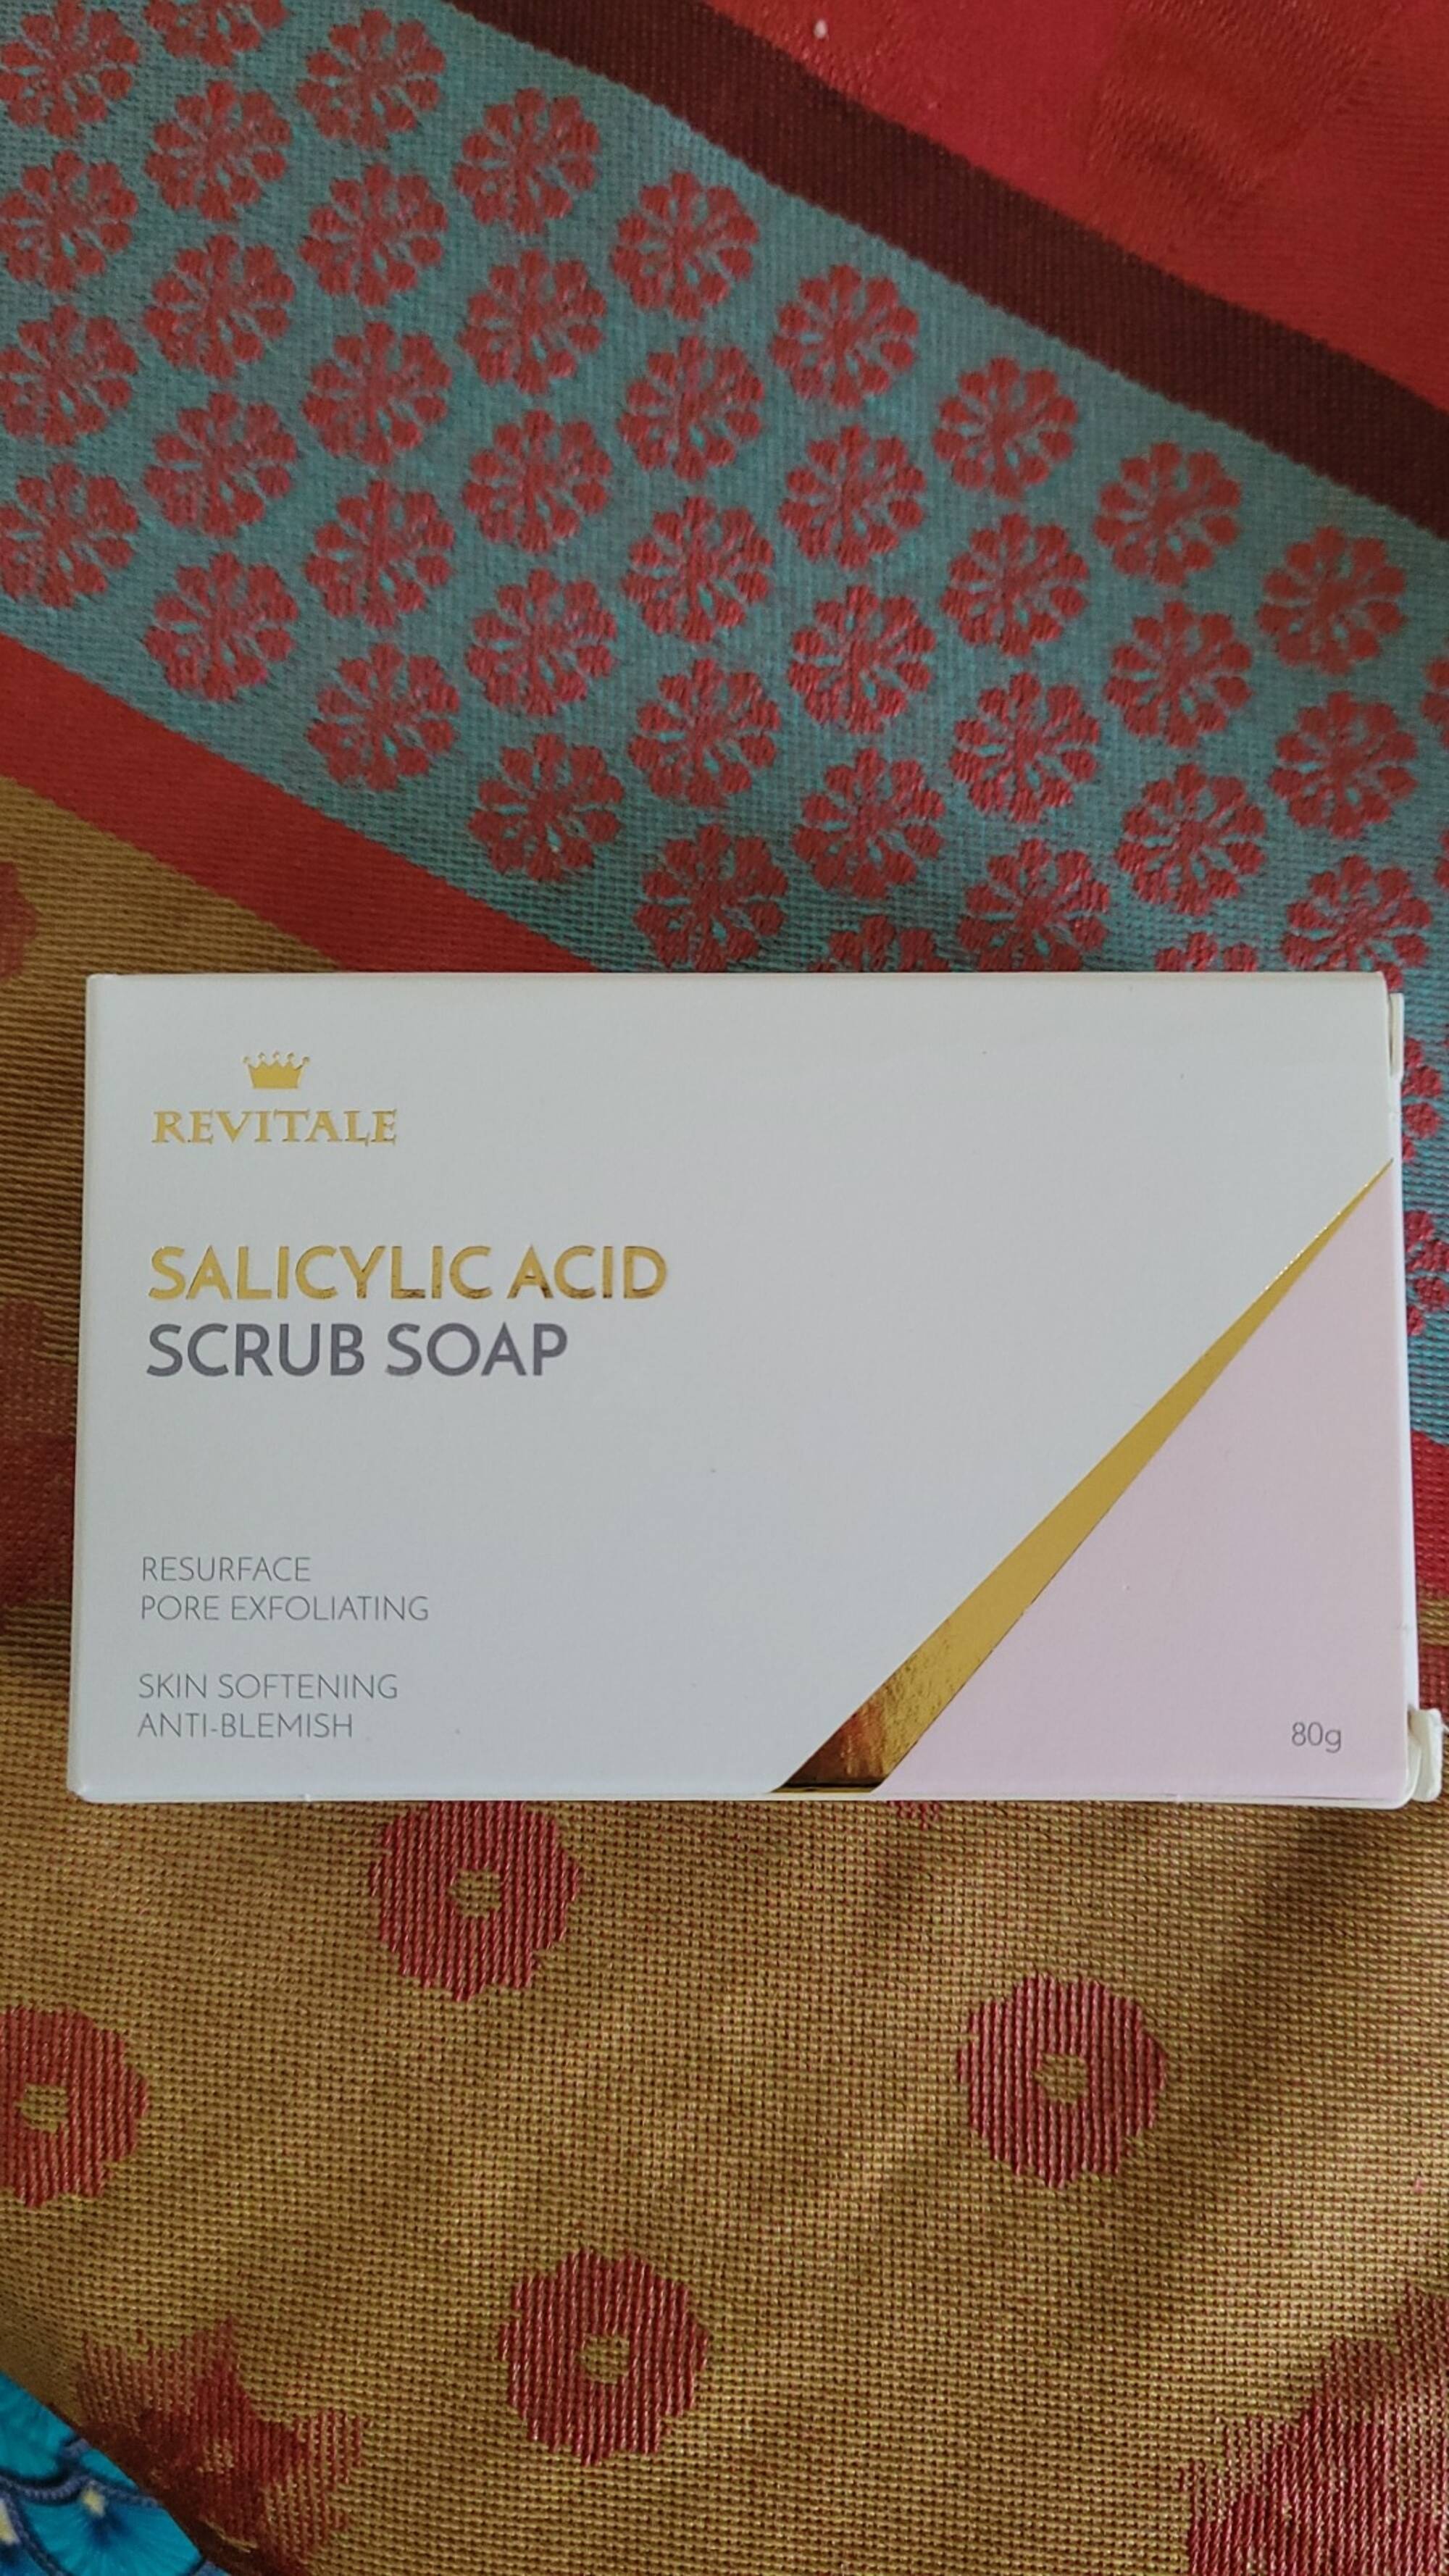 REVITALE - Salicylic acid - Scrub soap